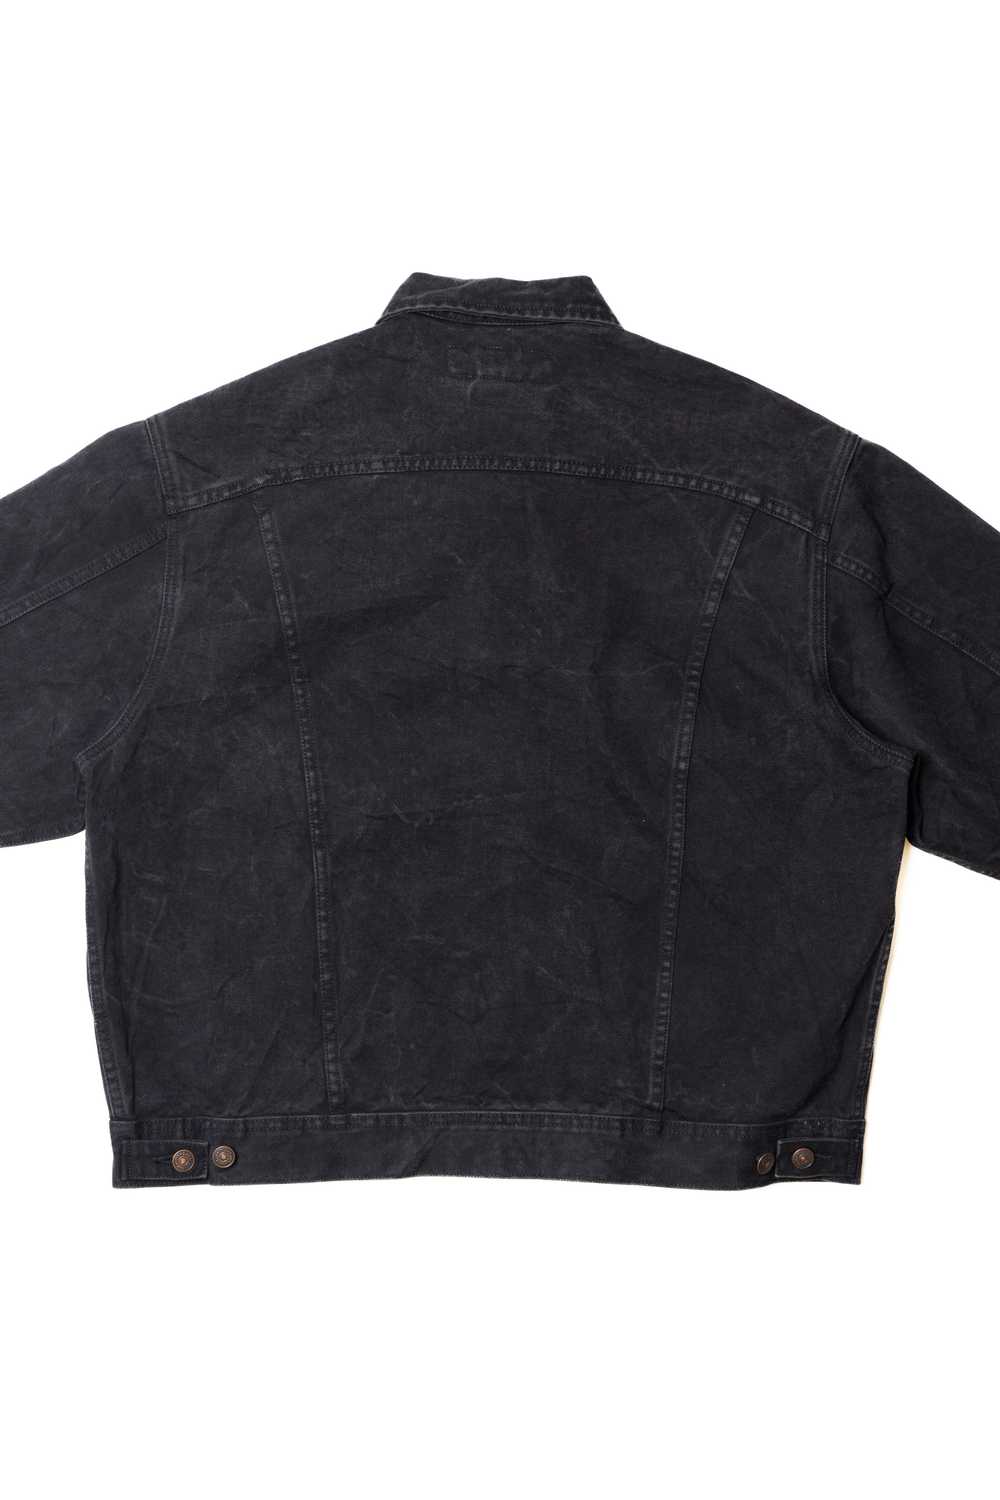 Vintage Lee Black Denim Jacket - image 4